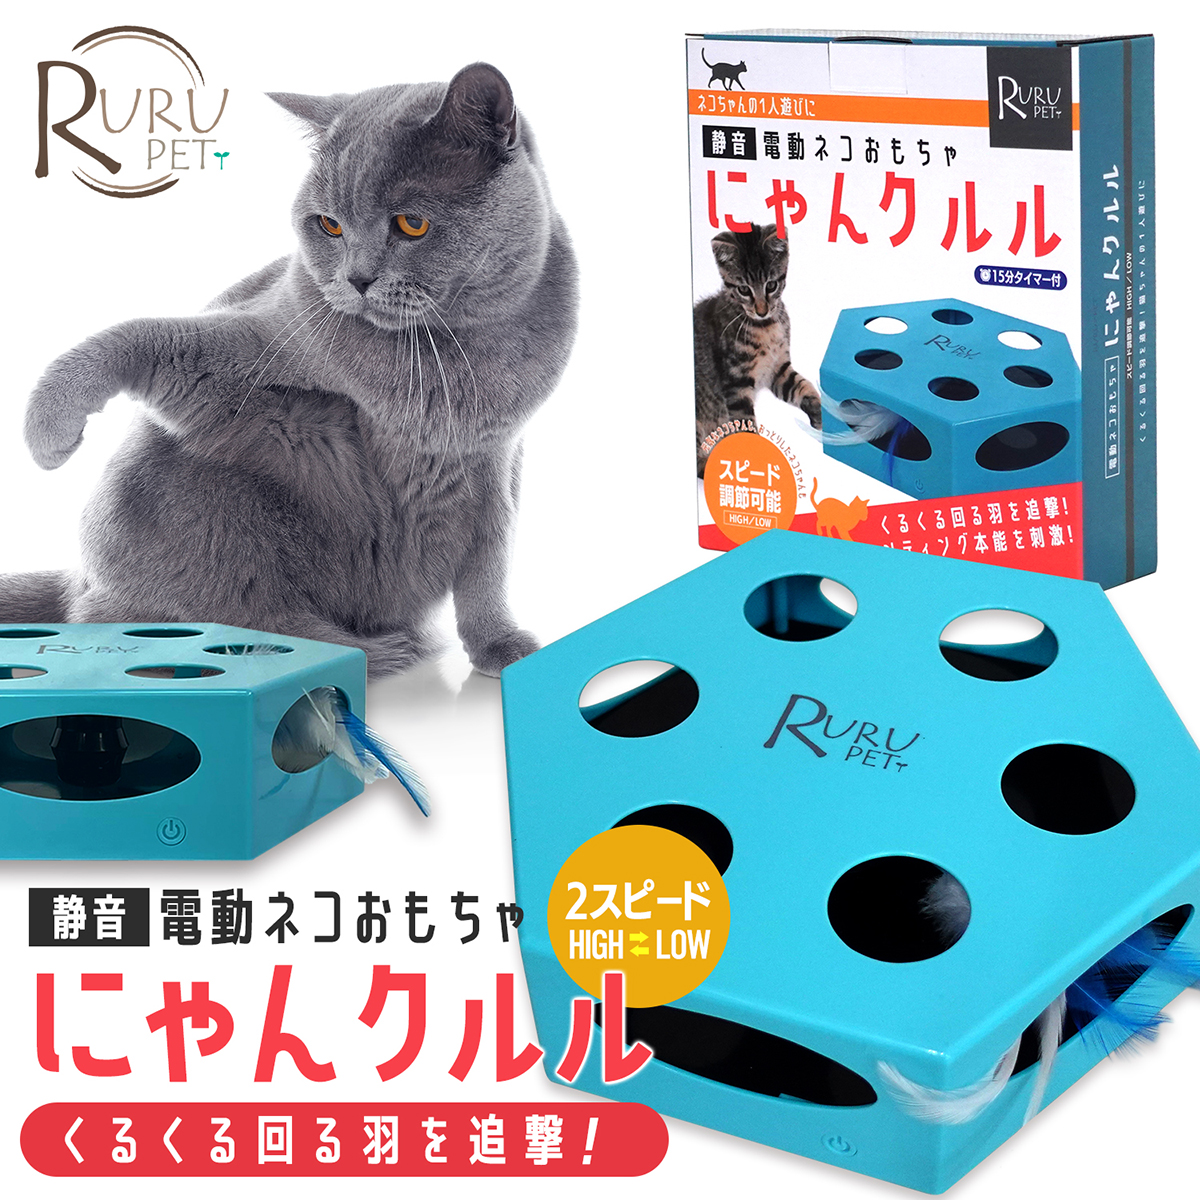 RURU PET 電動 猫おもちゃ にゃんクルル(２スピード)<br>猫 ネコ おもちゃ 玩具 猫じゃらし 電動 自動 電池式 タイマー付き